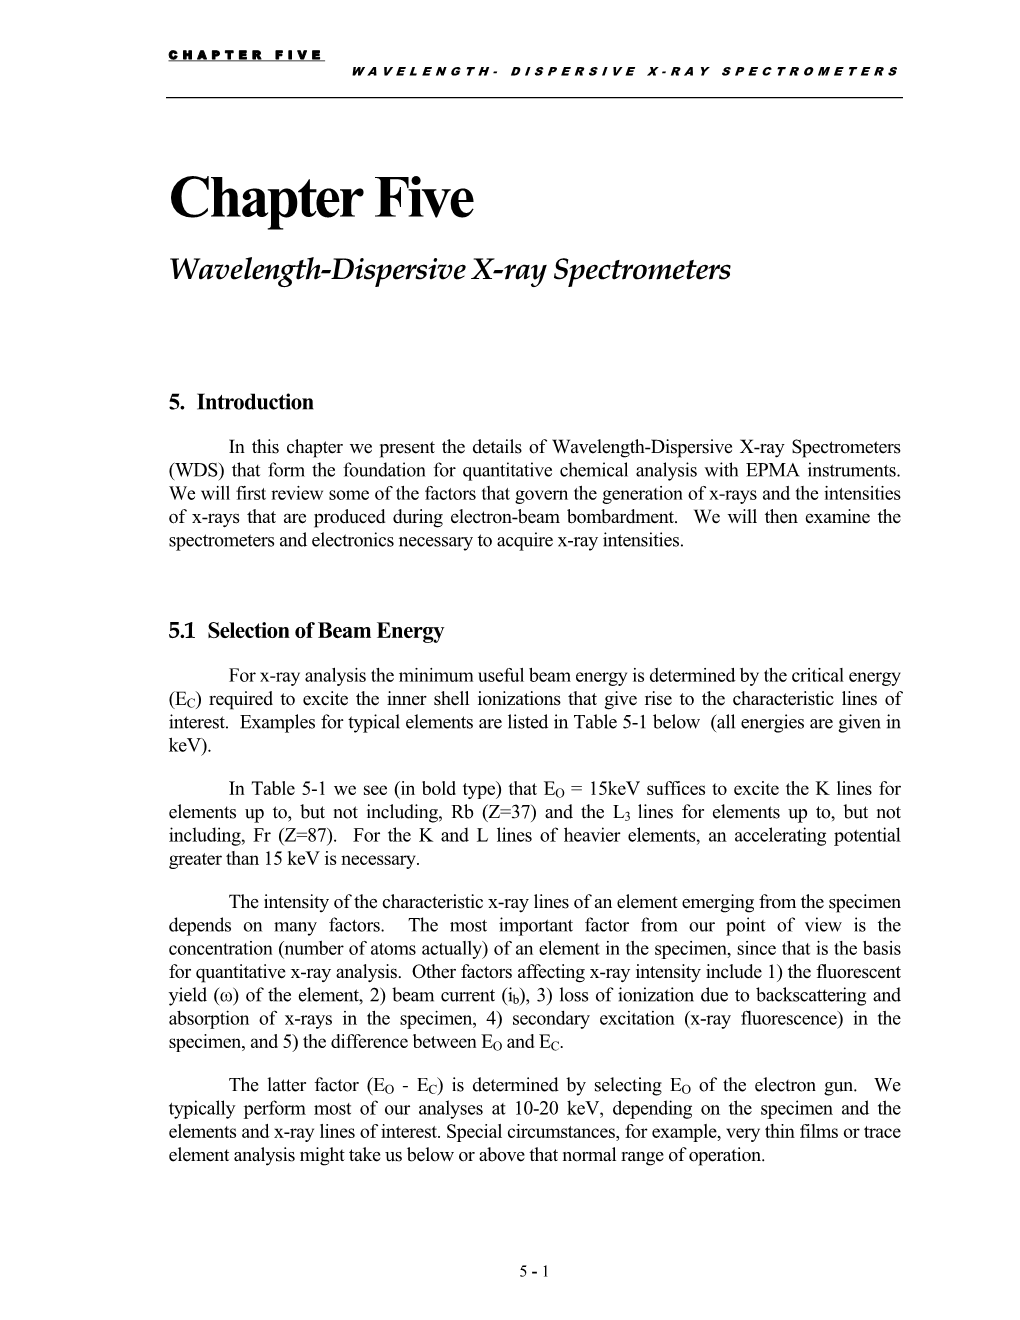 Chapter 5 Wavelength Dispersive Spectrometry